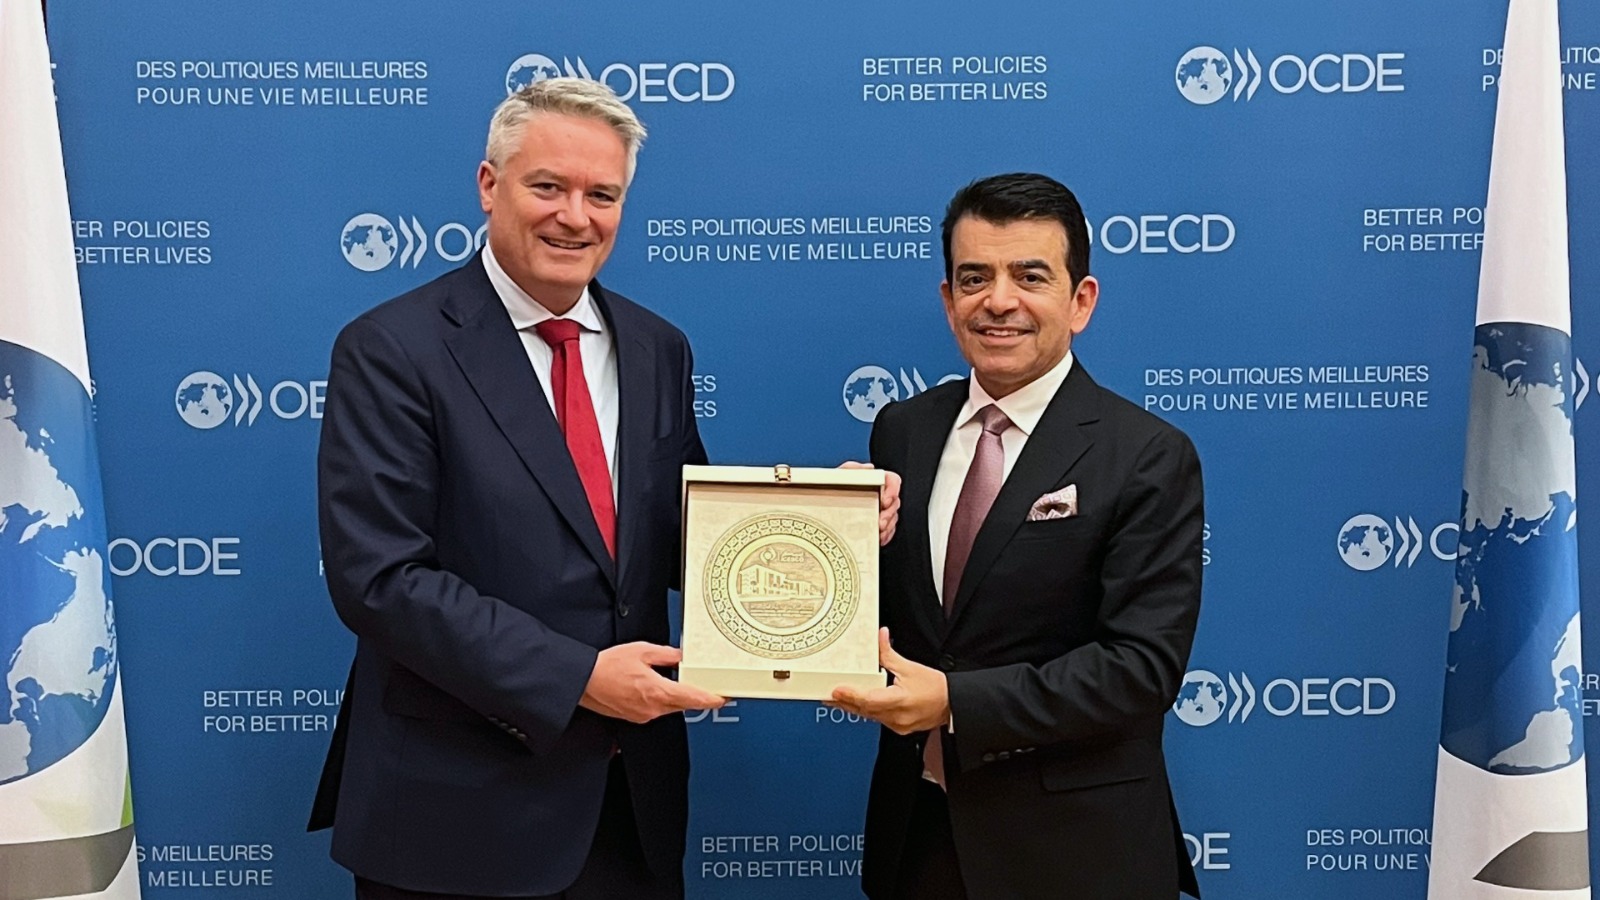 ICESCO and OECD Agree to Enhance Partnership